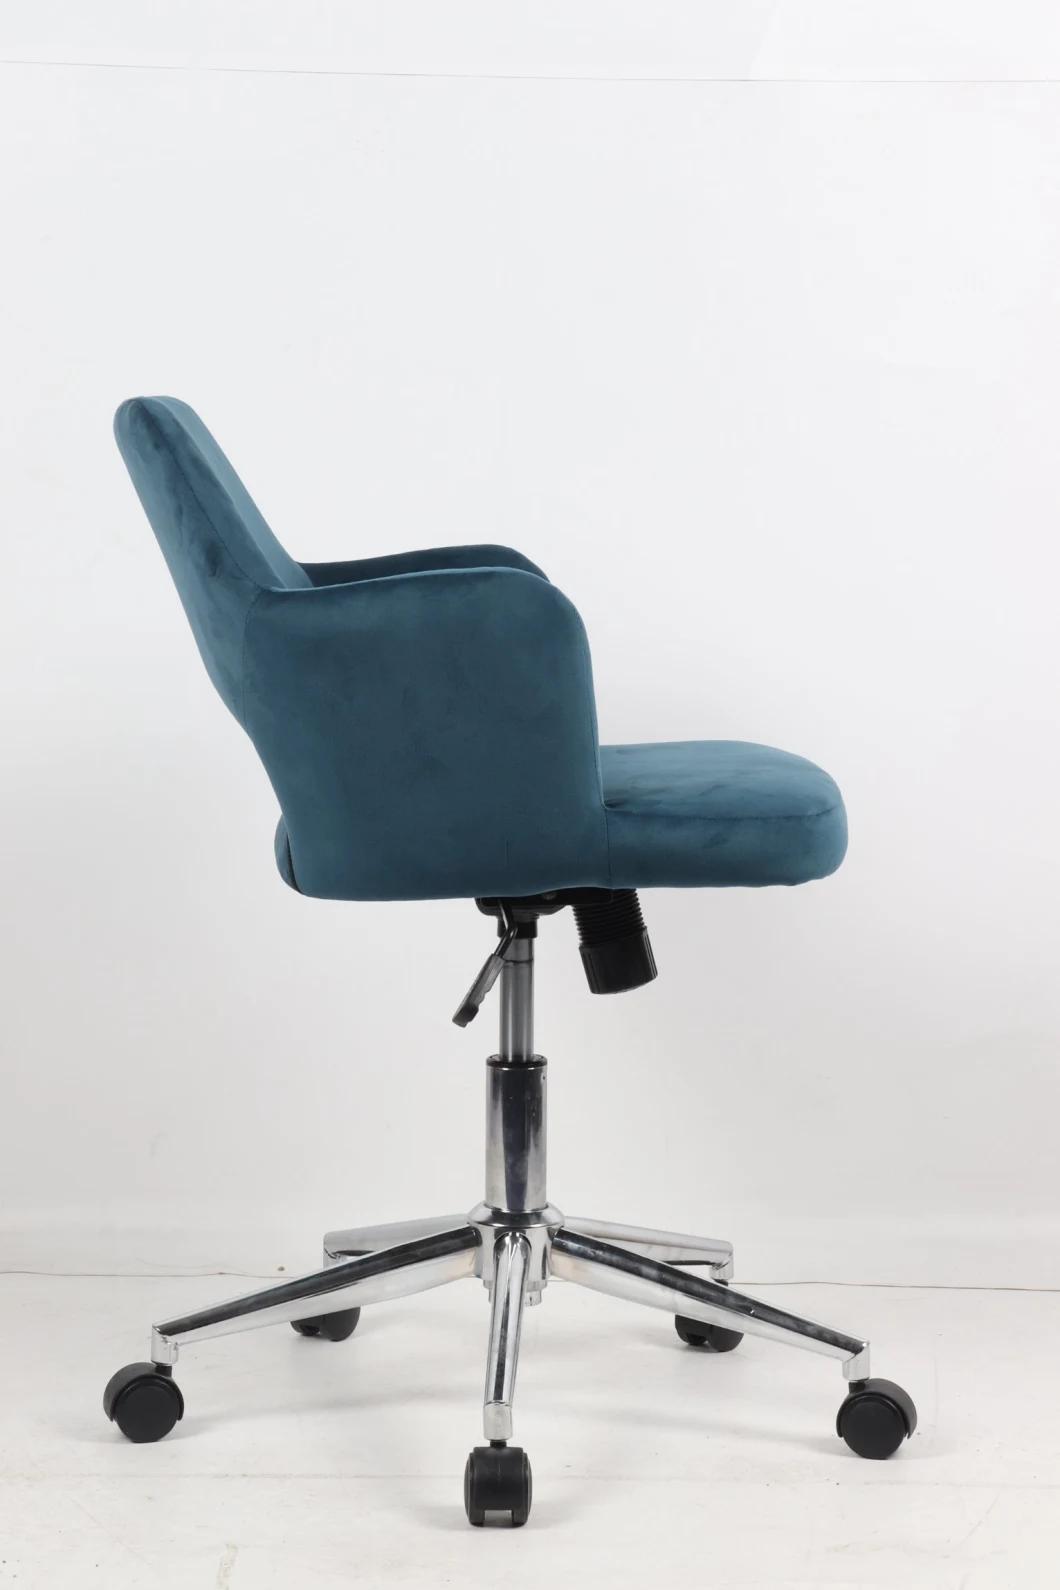 Modern Adjustable Luxury High Quality Dining Chair Bar Stool Furniture